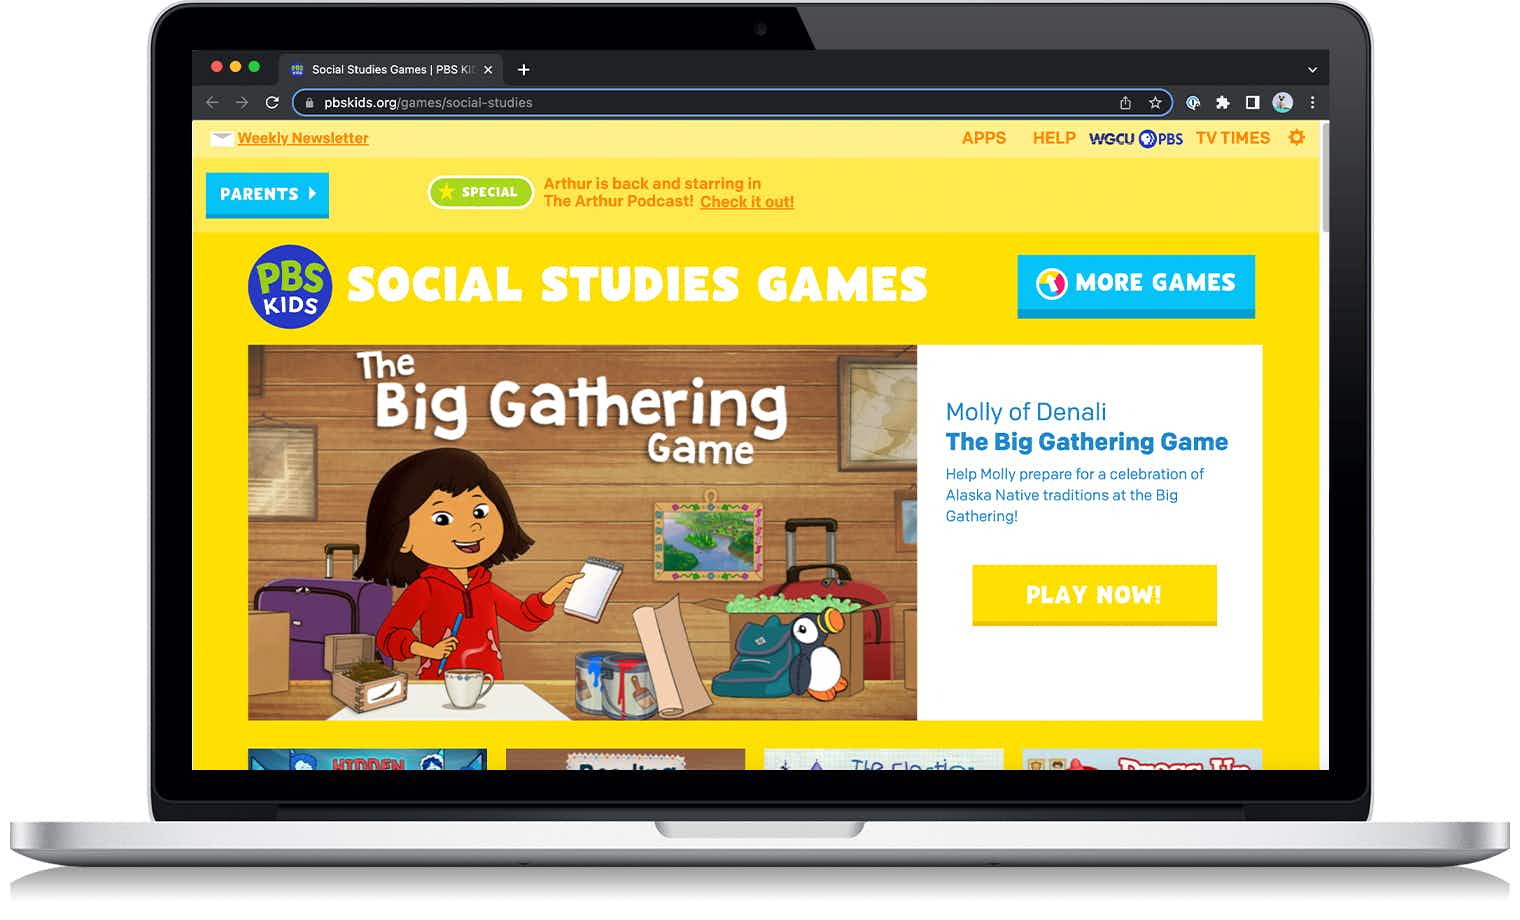 A screenshot from the PBS Kids social studies games website on a laptop